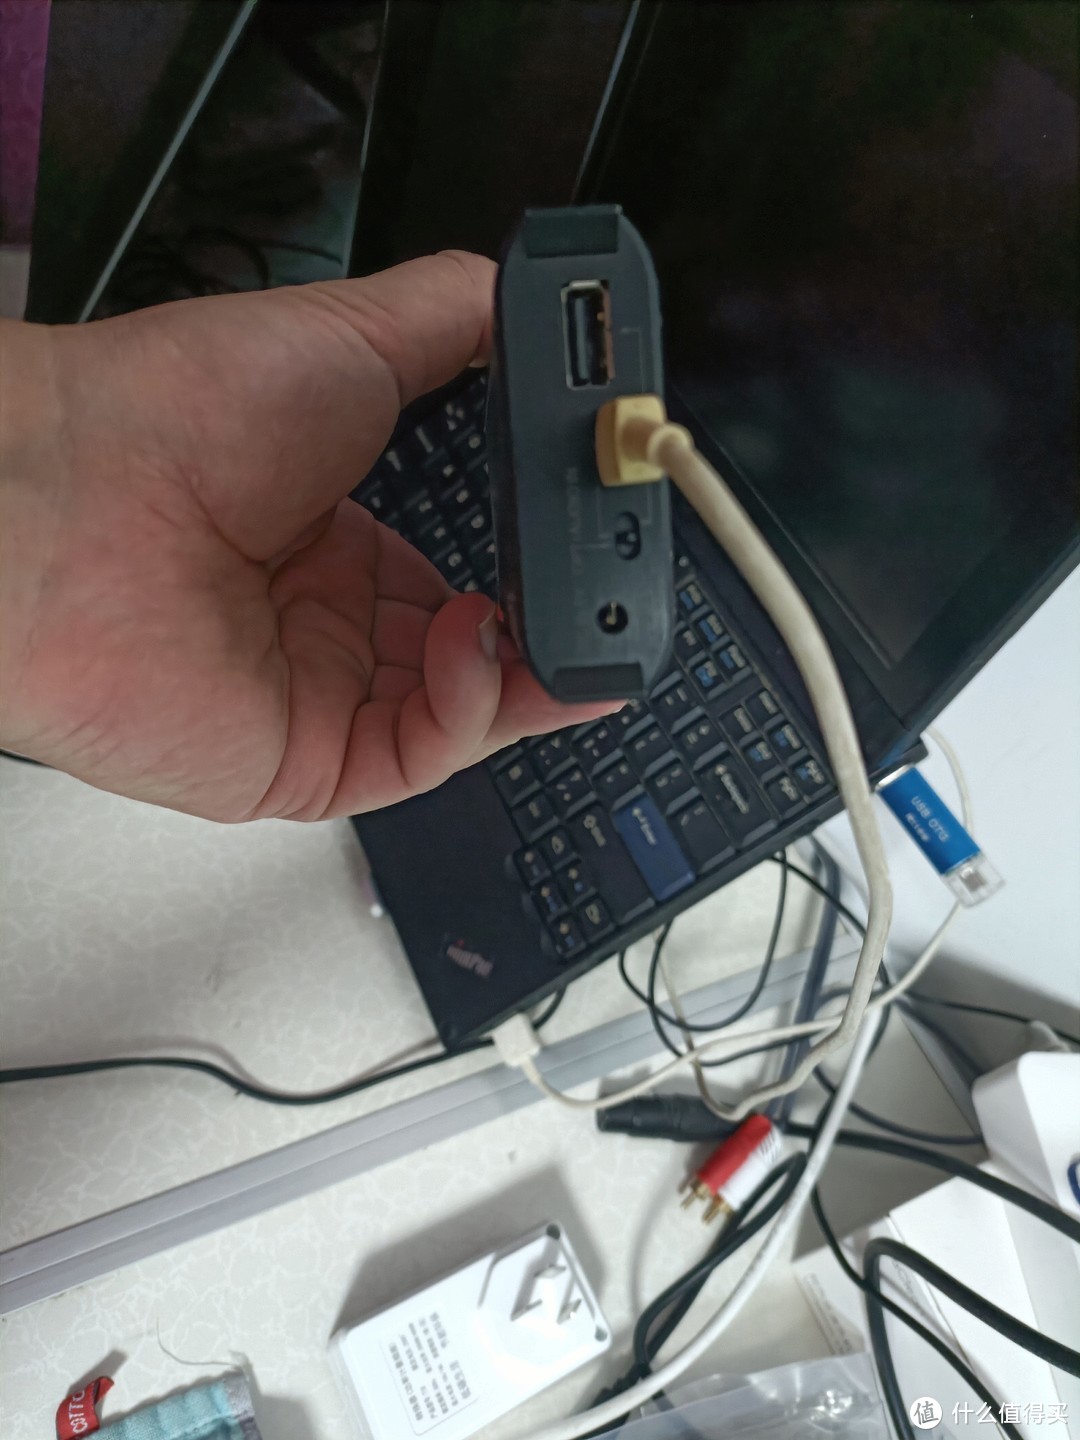 用ThinkPad X200T&ONKYO 安桥 DAC-HA200  USB解码器  搭建DAPHILE系统记录